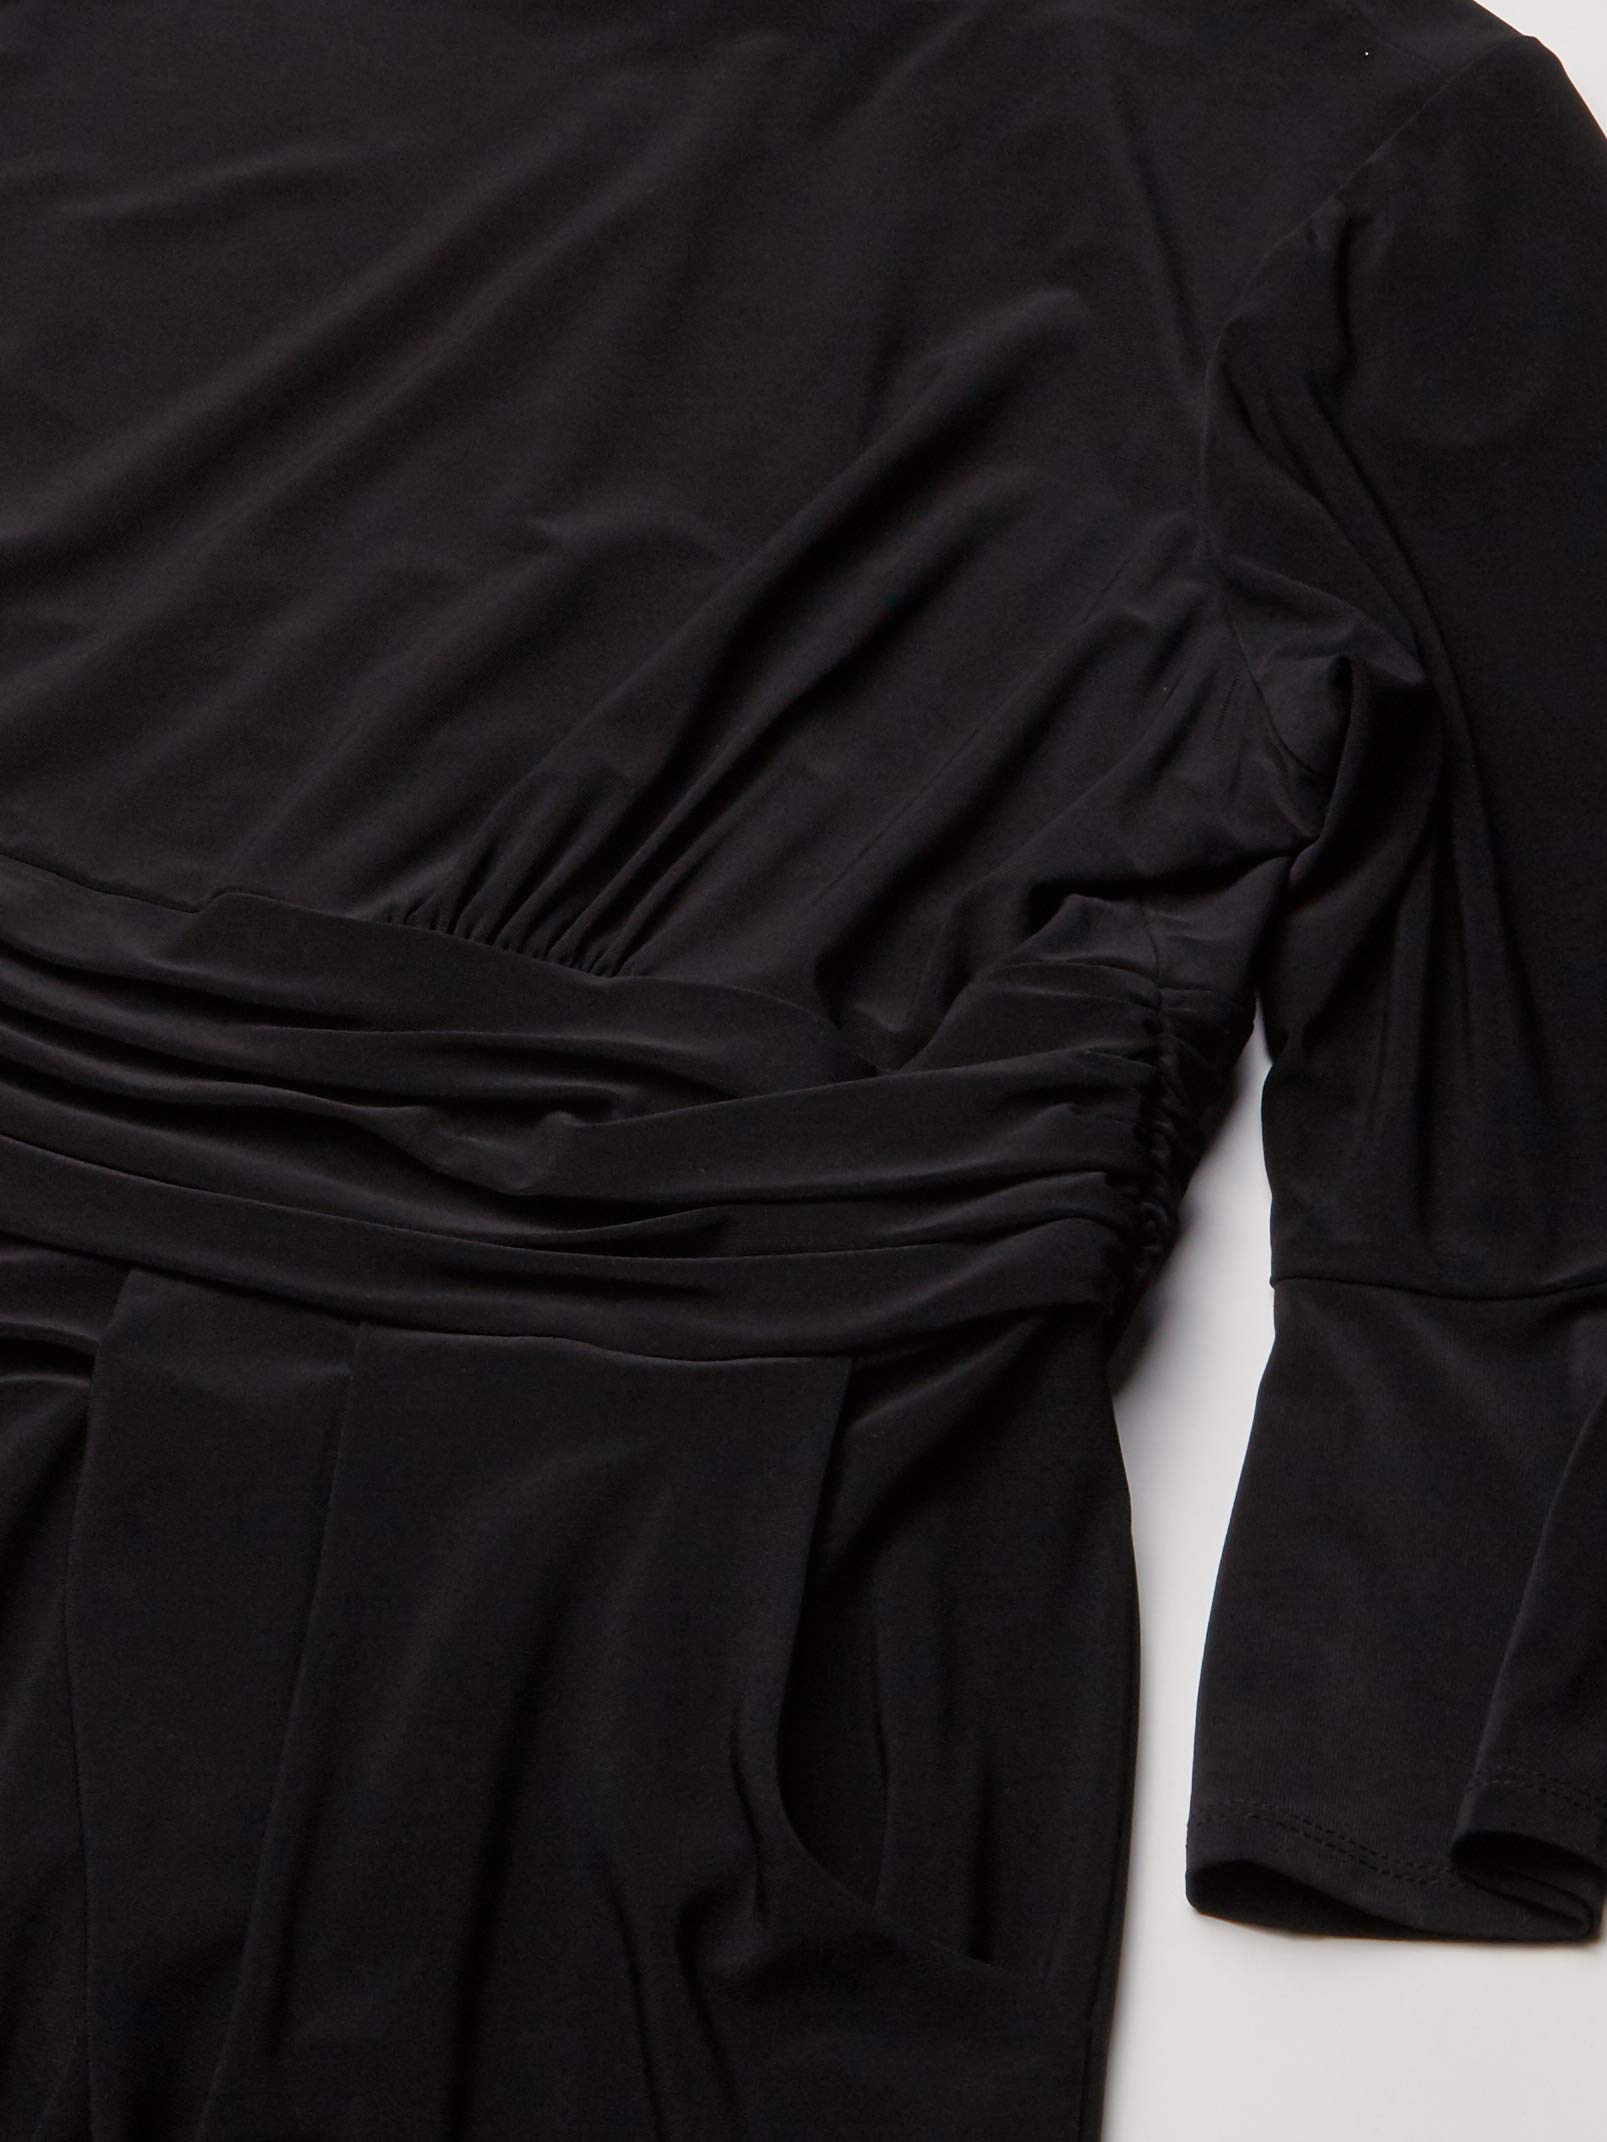 Eliza J Women's Plus Size Sheath Dress with Flounce Sleeve